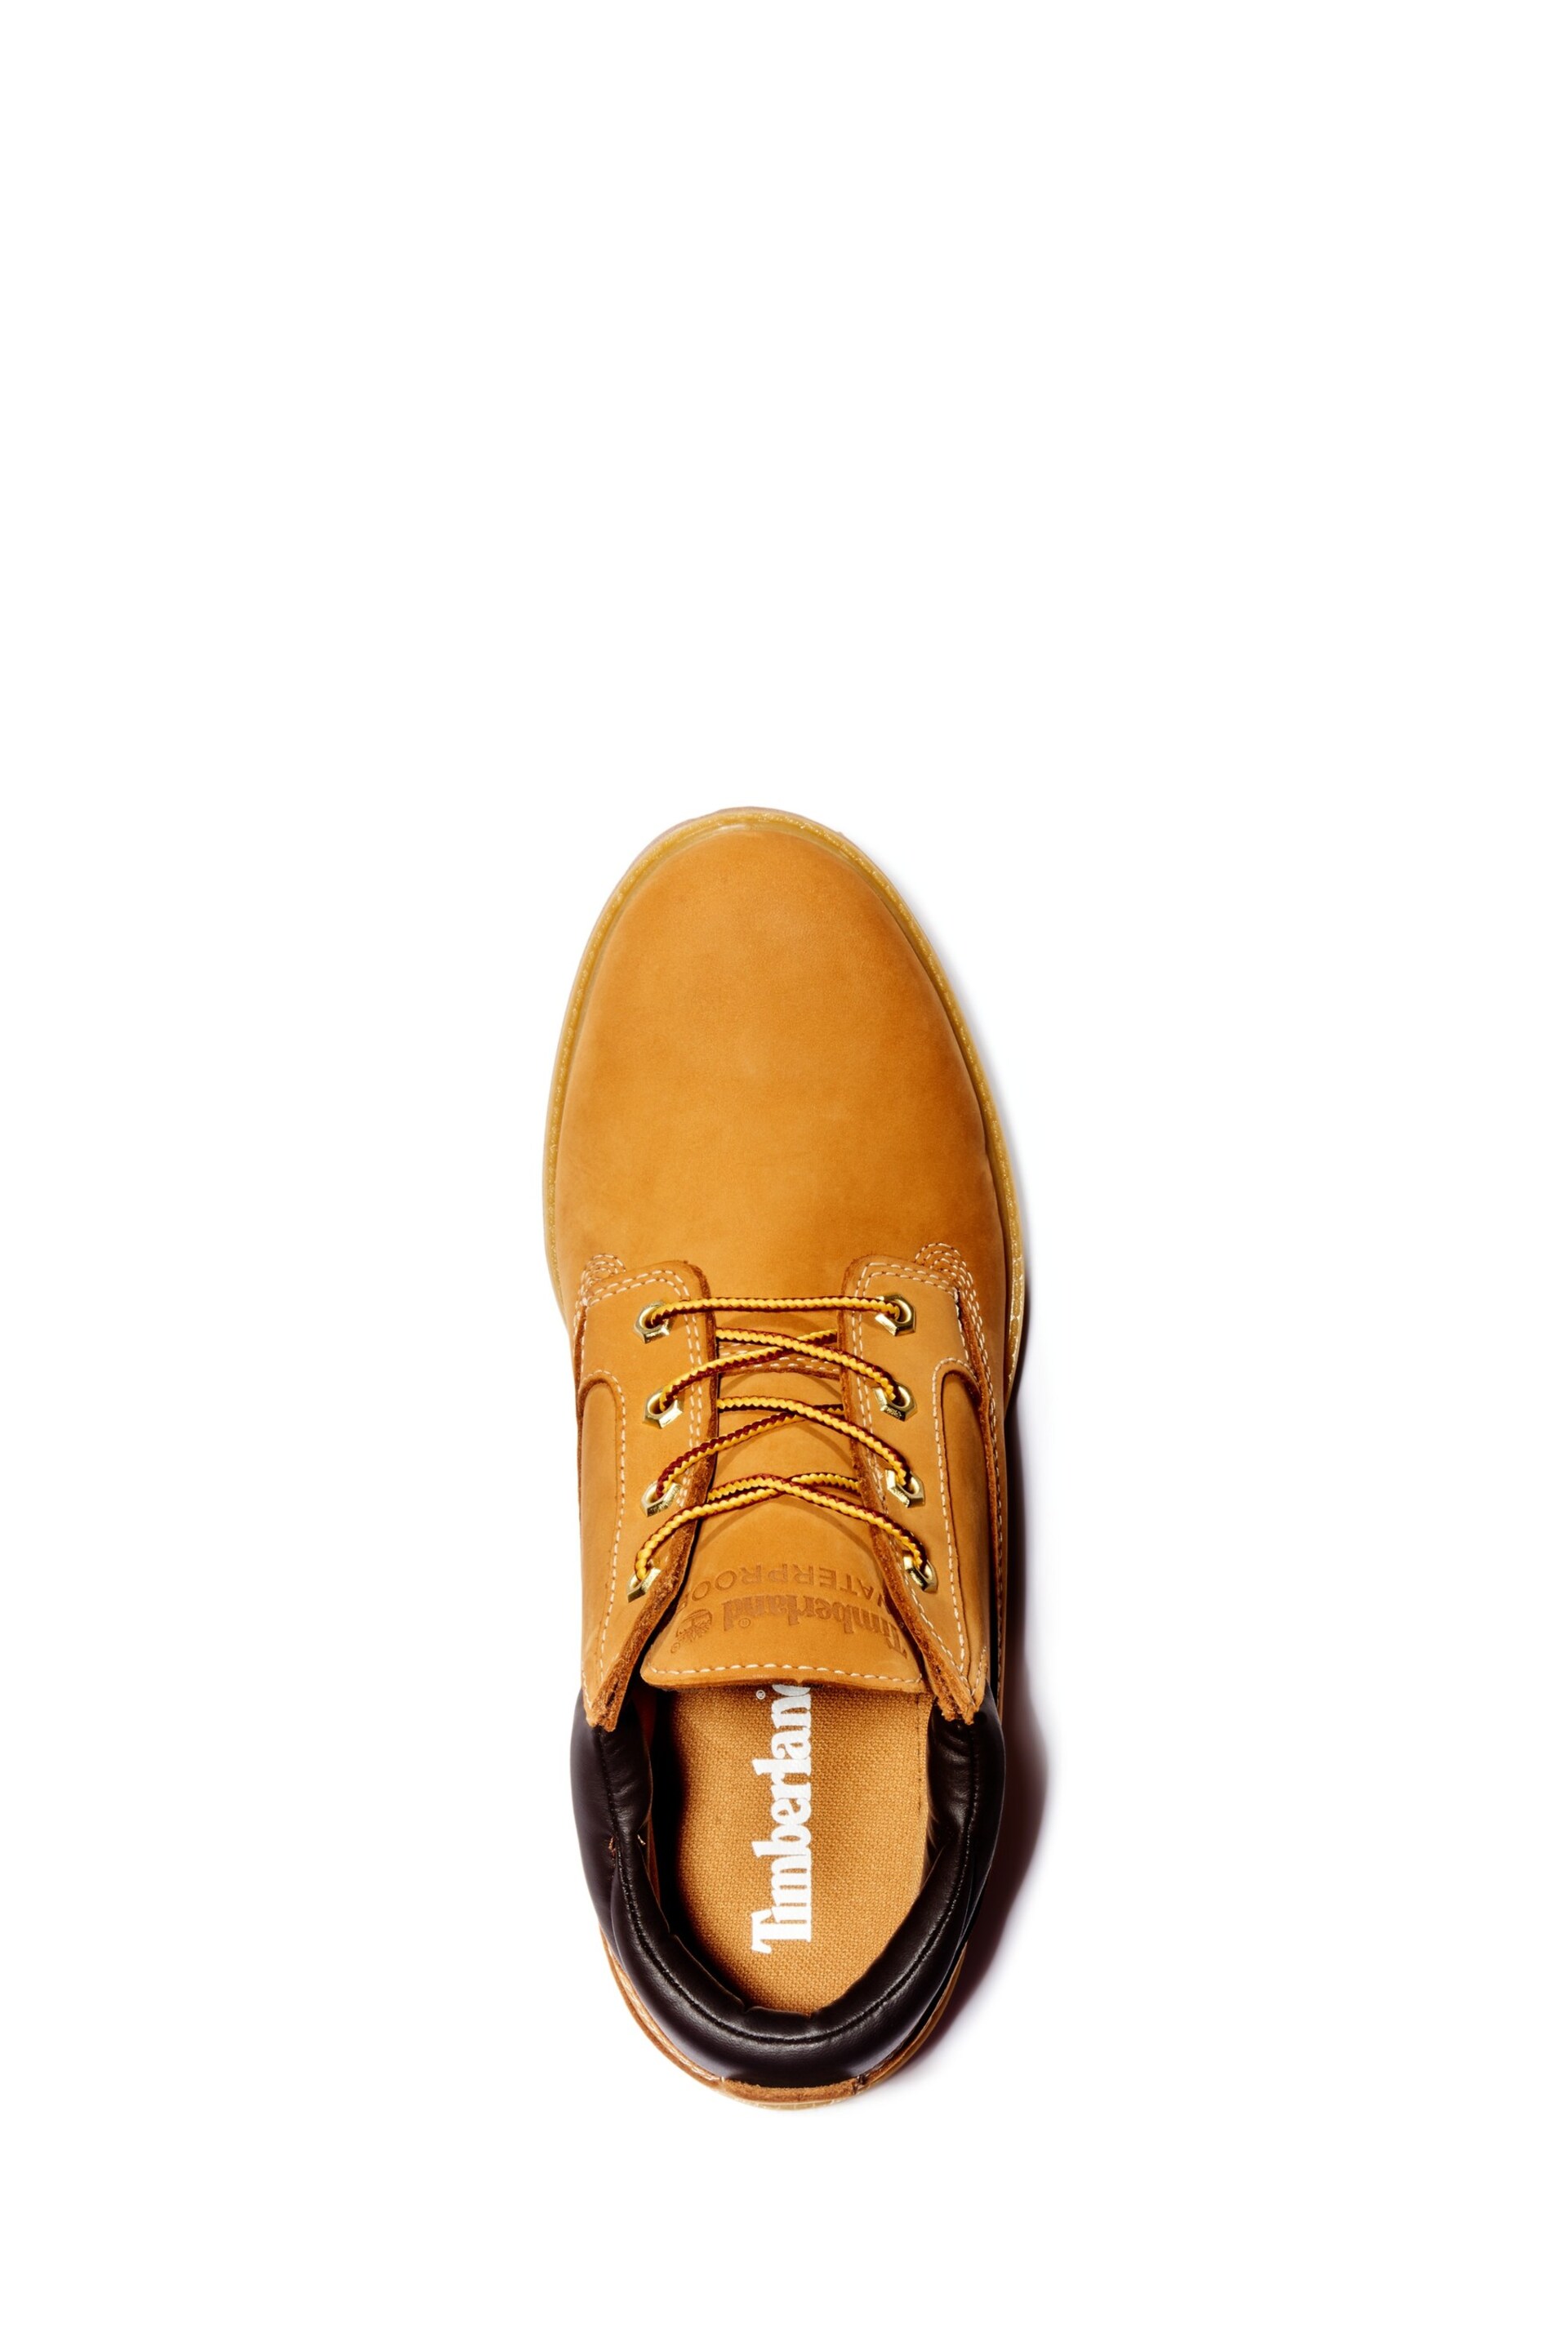 Timberland® Nellie Chukka Boots - Image 3 of 5